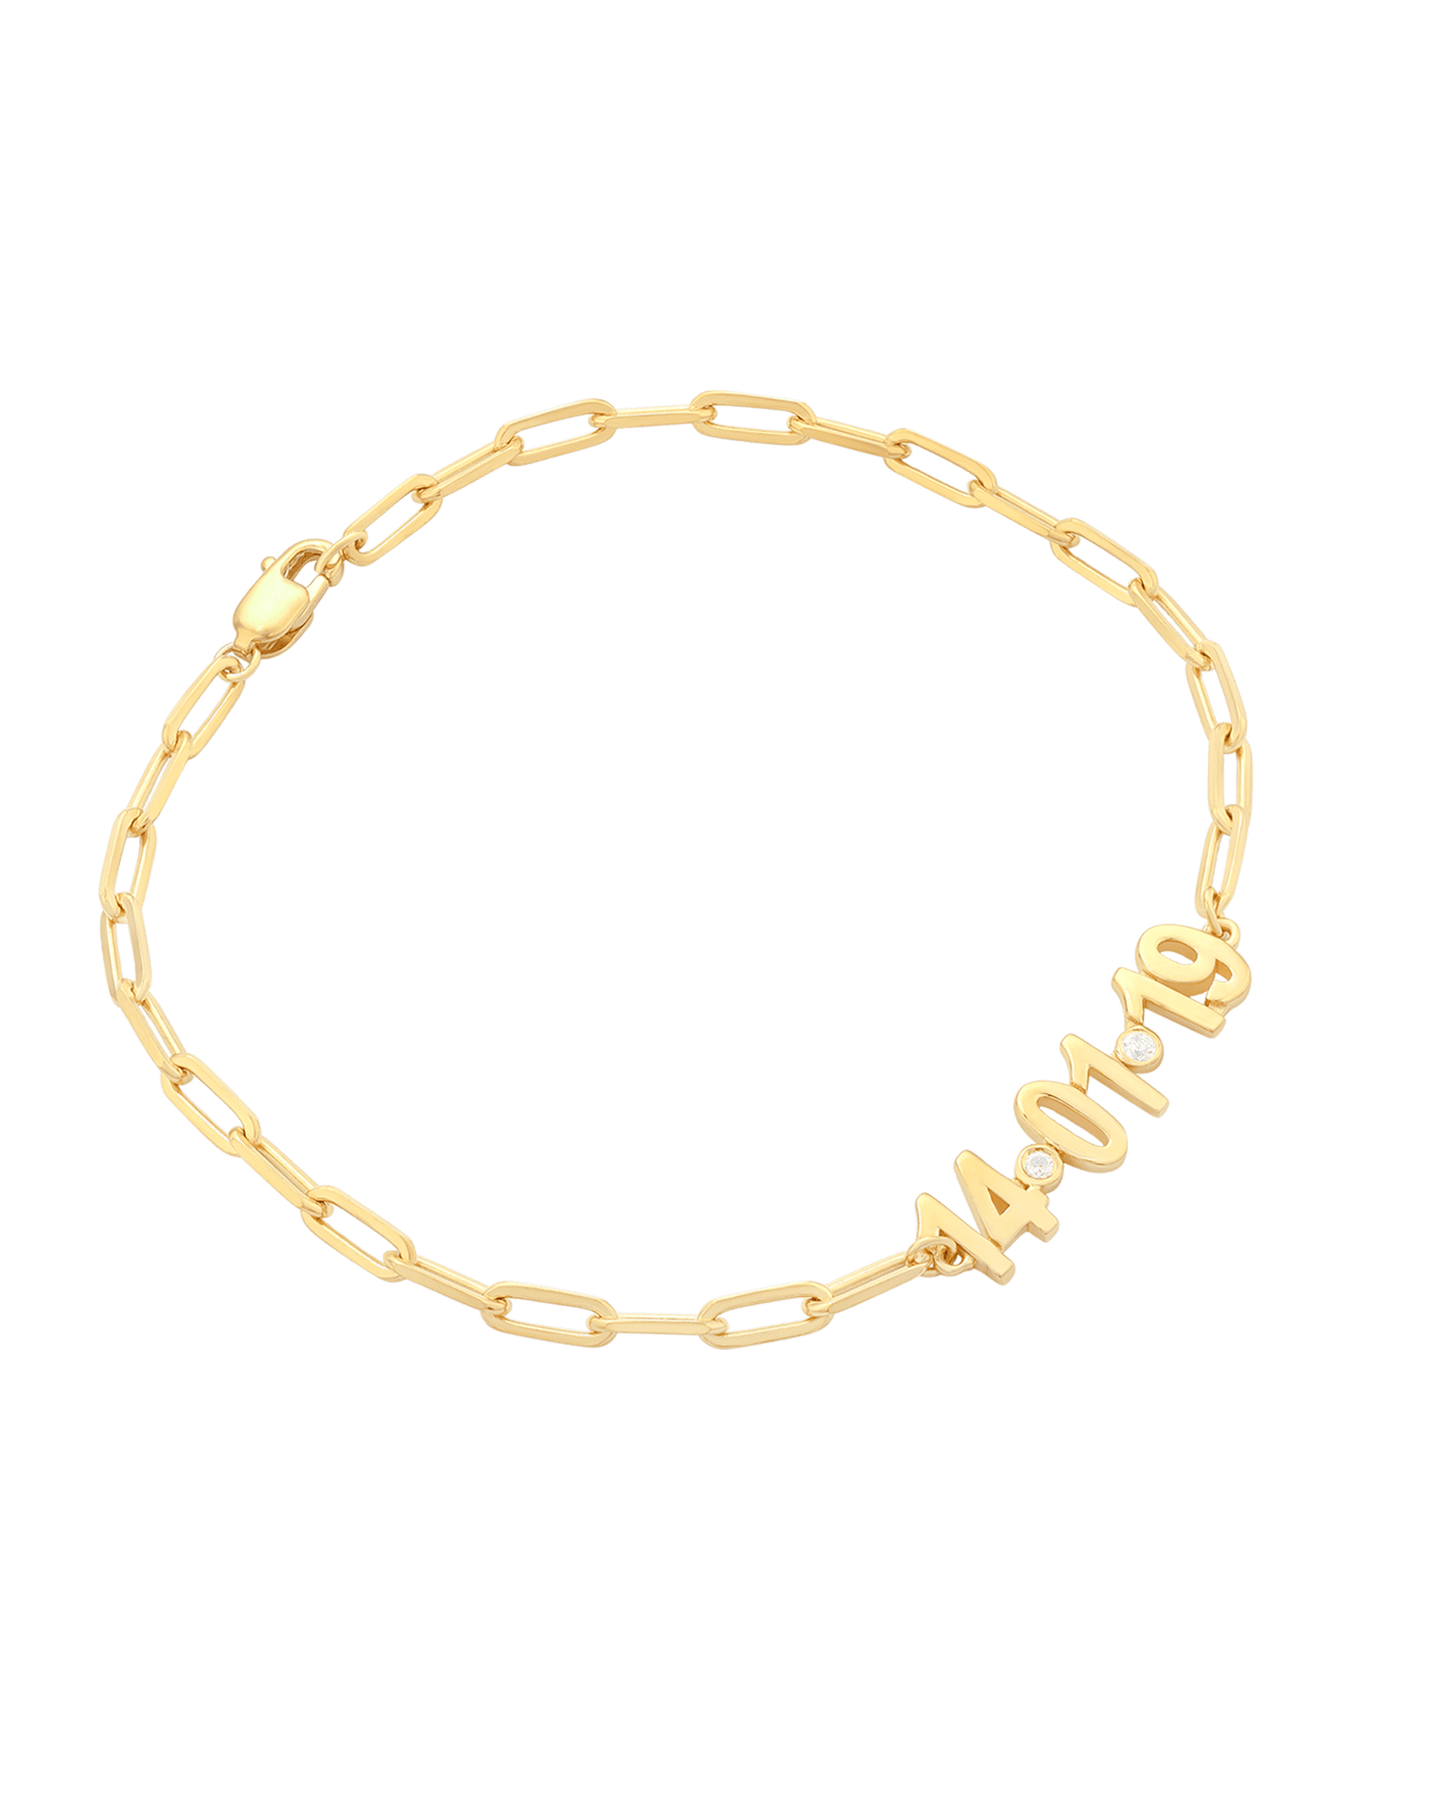 Birthdate Diamond Bracelet - 14K Yellow Gold Bracelets magal-dev 6" 